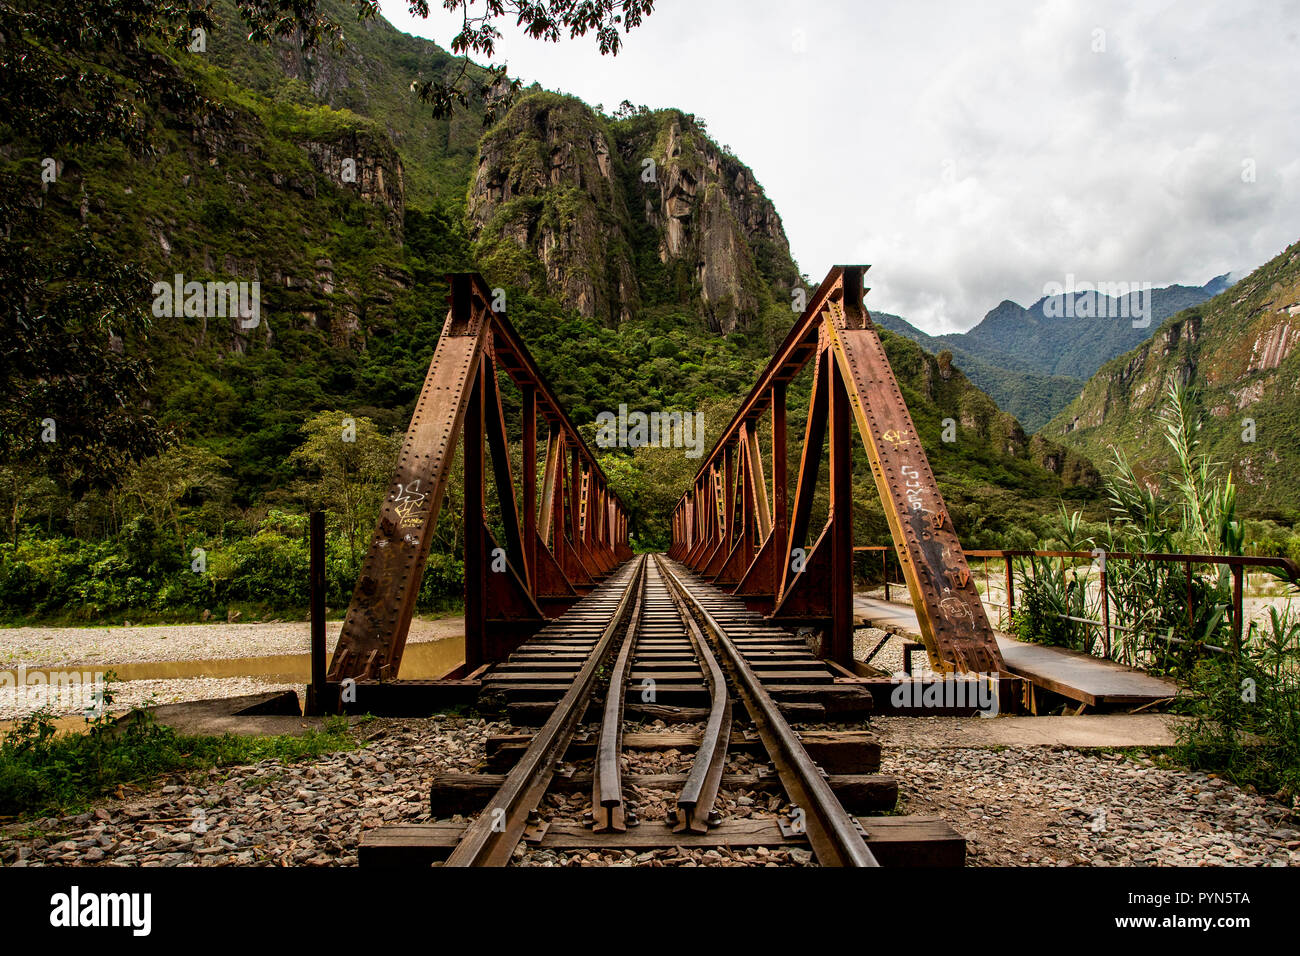 Zu Fuß auf dem Weg nach Machu Picchu, den Zuggleisen entlang / On foot on the way to Machu Picchu, along the train tracks , Peru Südamerika Stock Photo